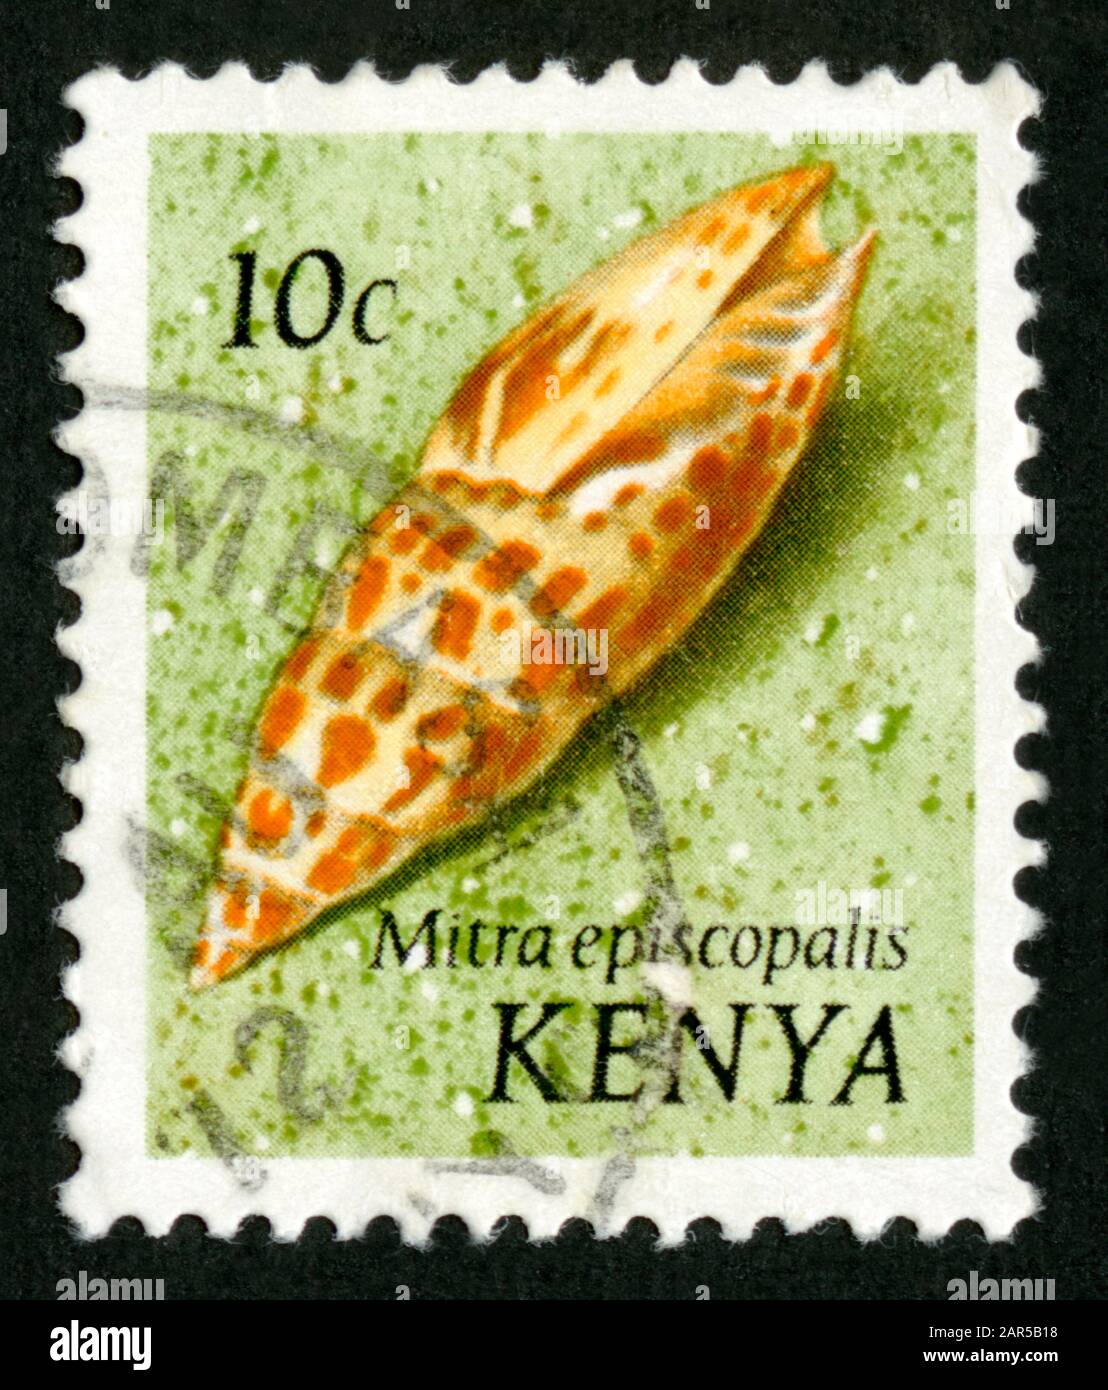 Stamp print in Kenya,Mitra episcopalis,shell Stock Photo